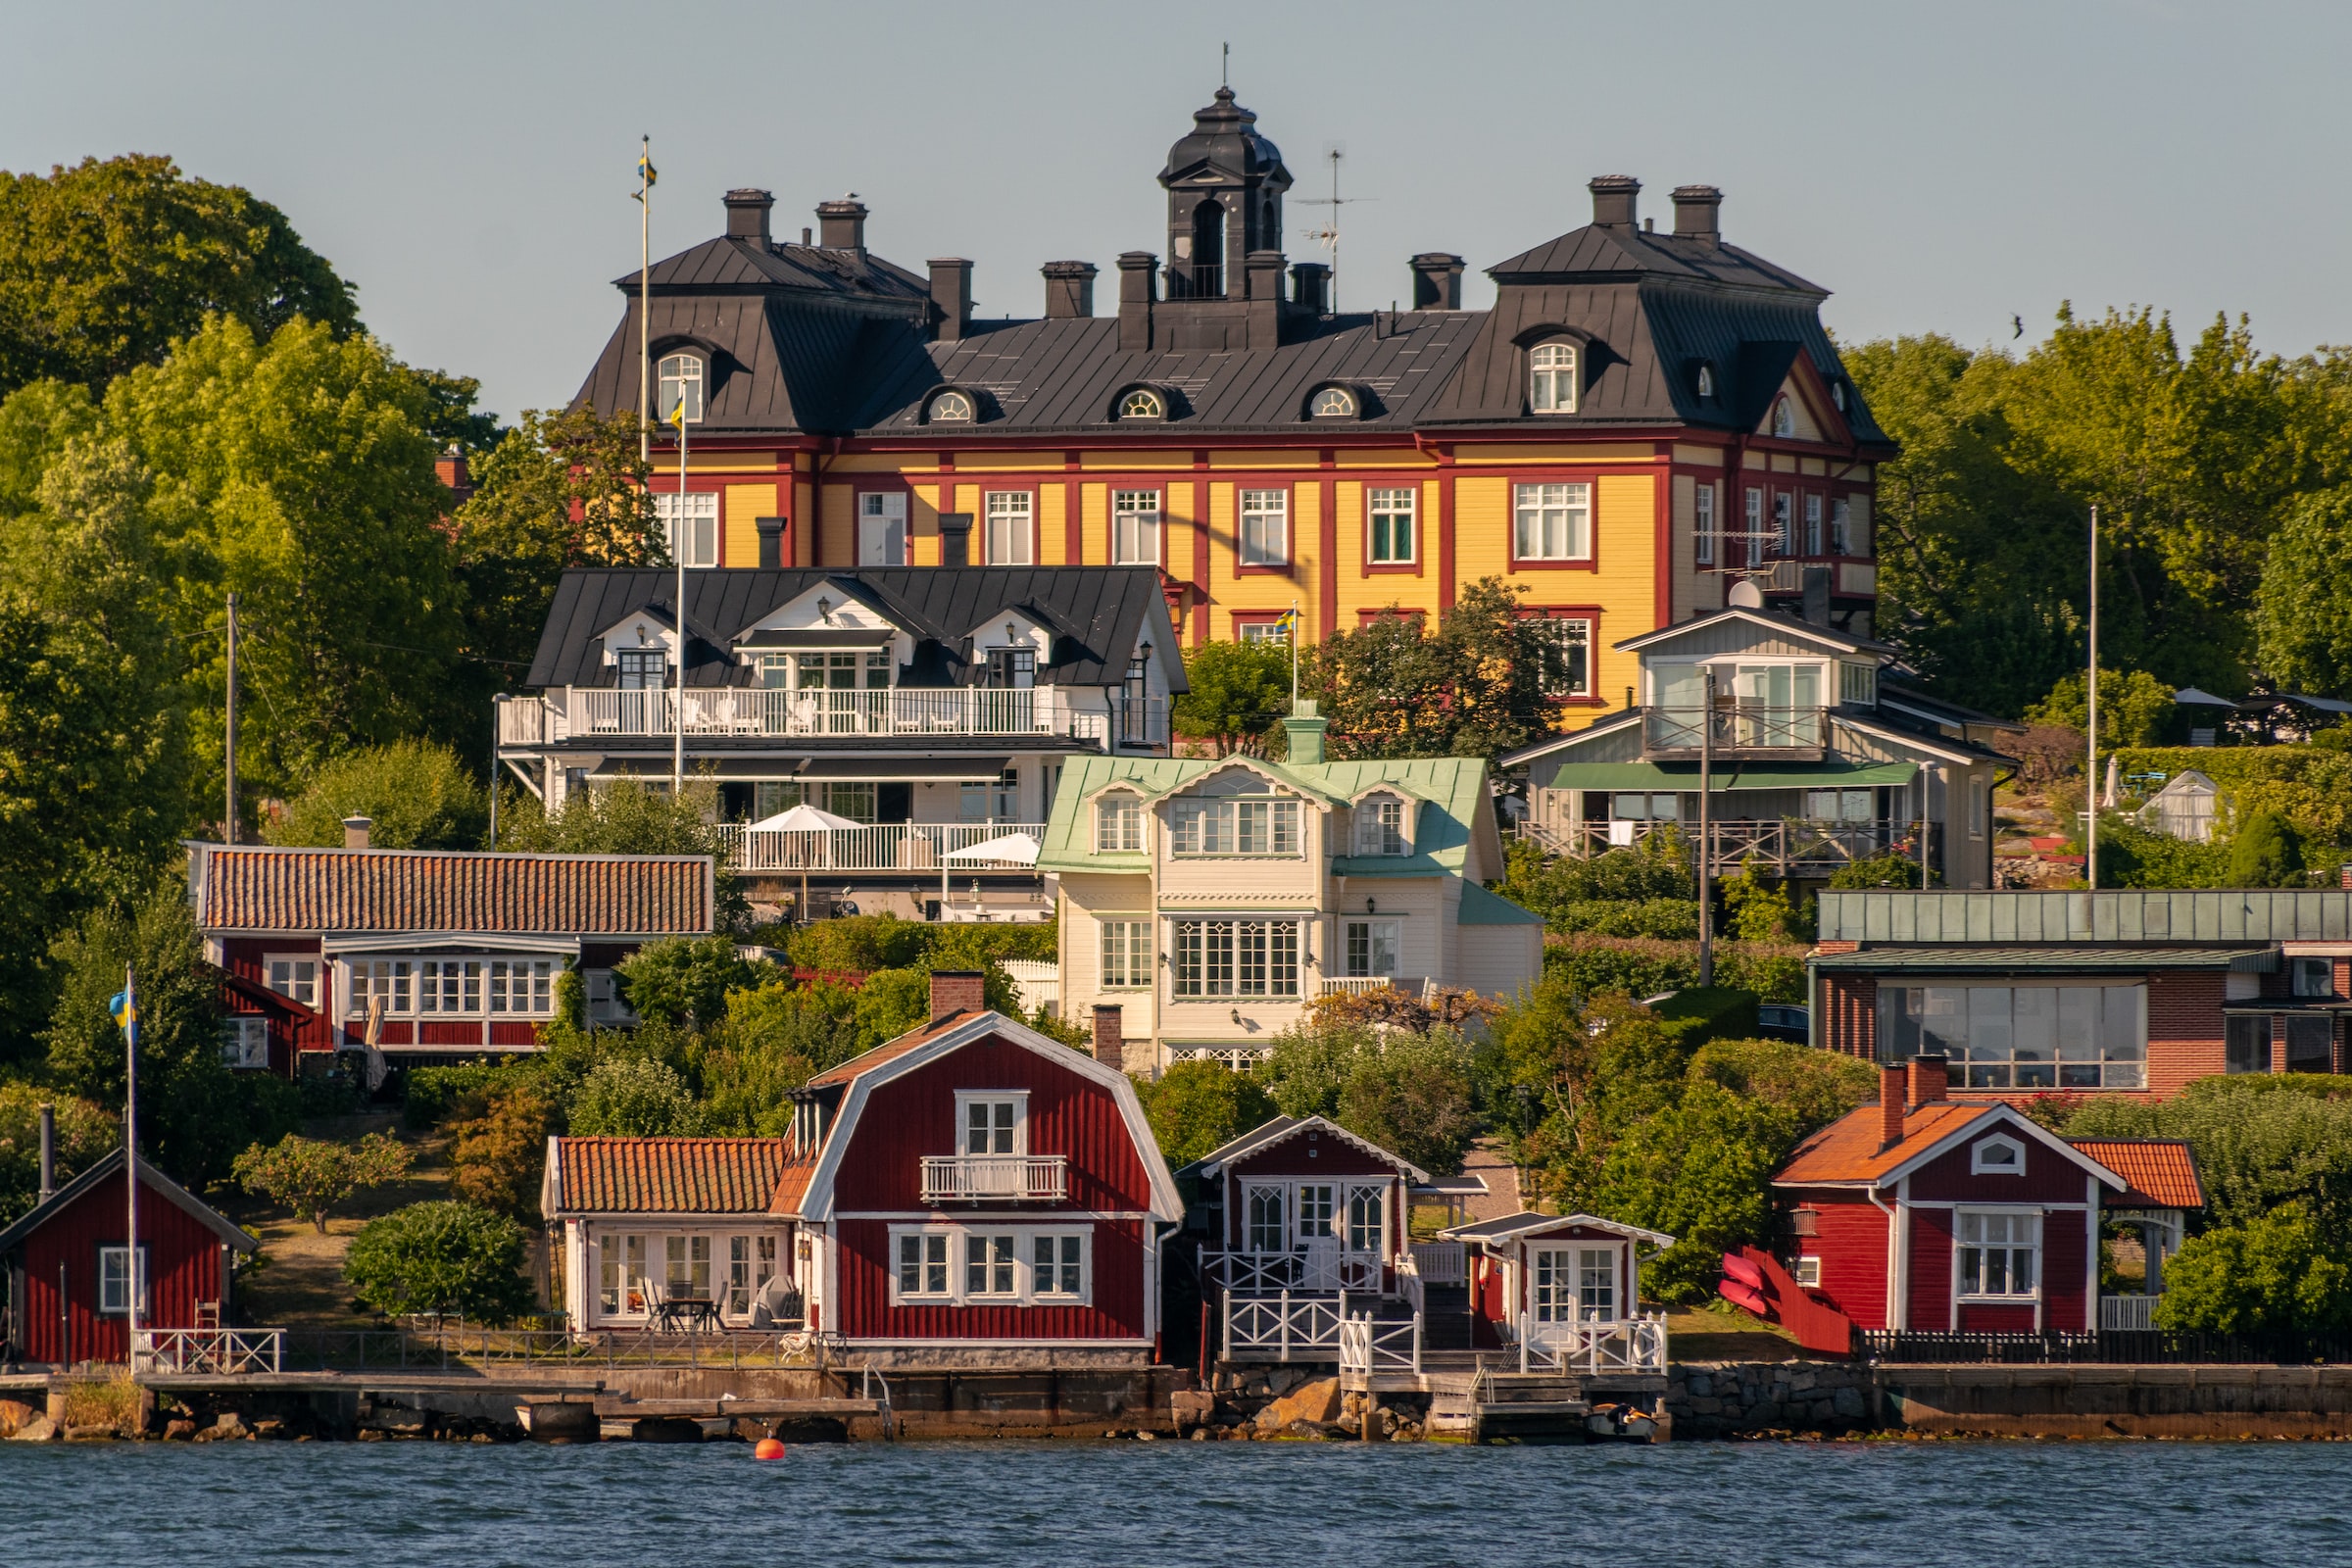 Vaxholm island in the Stockholm archipelago